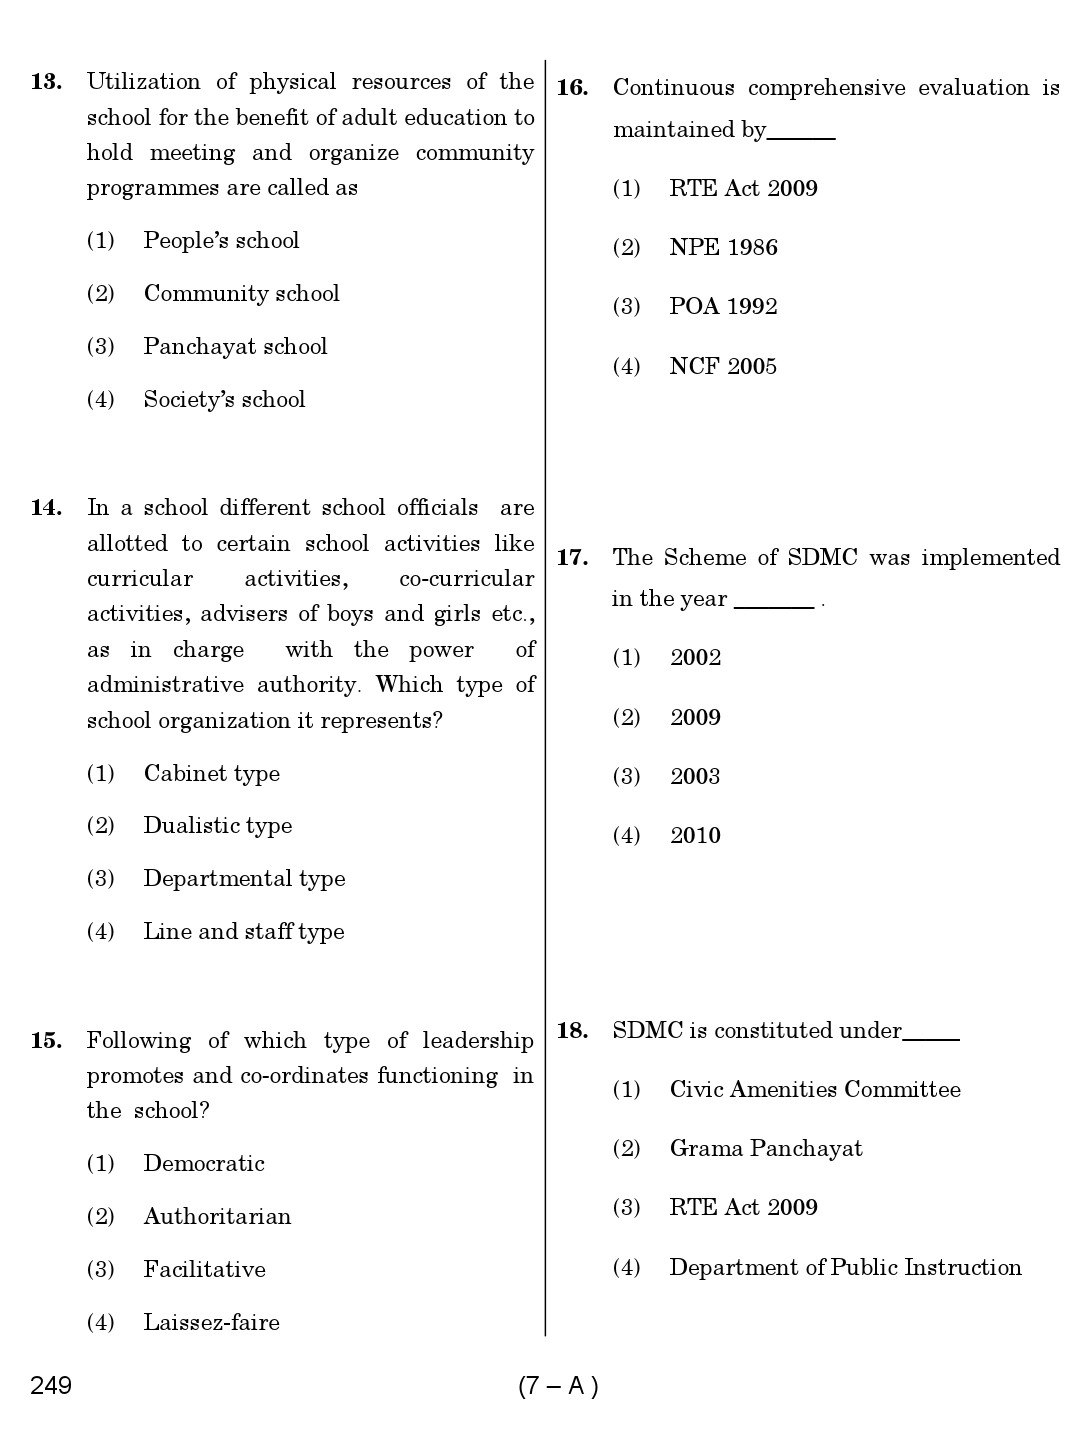 Karnataka PSC Principal Exam Sample Question Paper Subject code 249 7